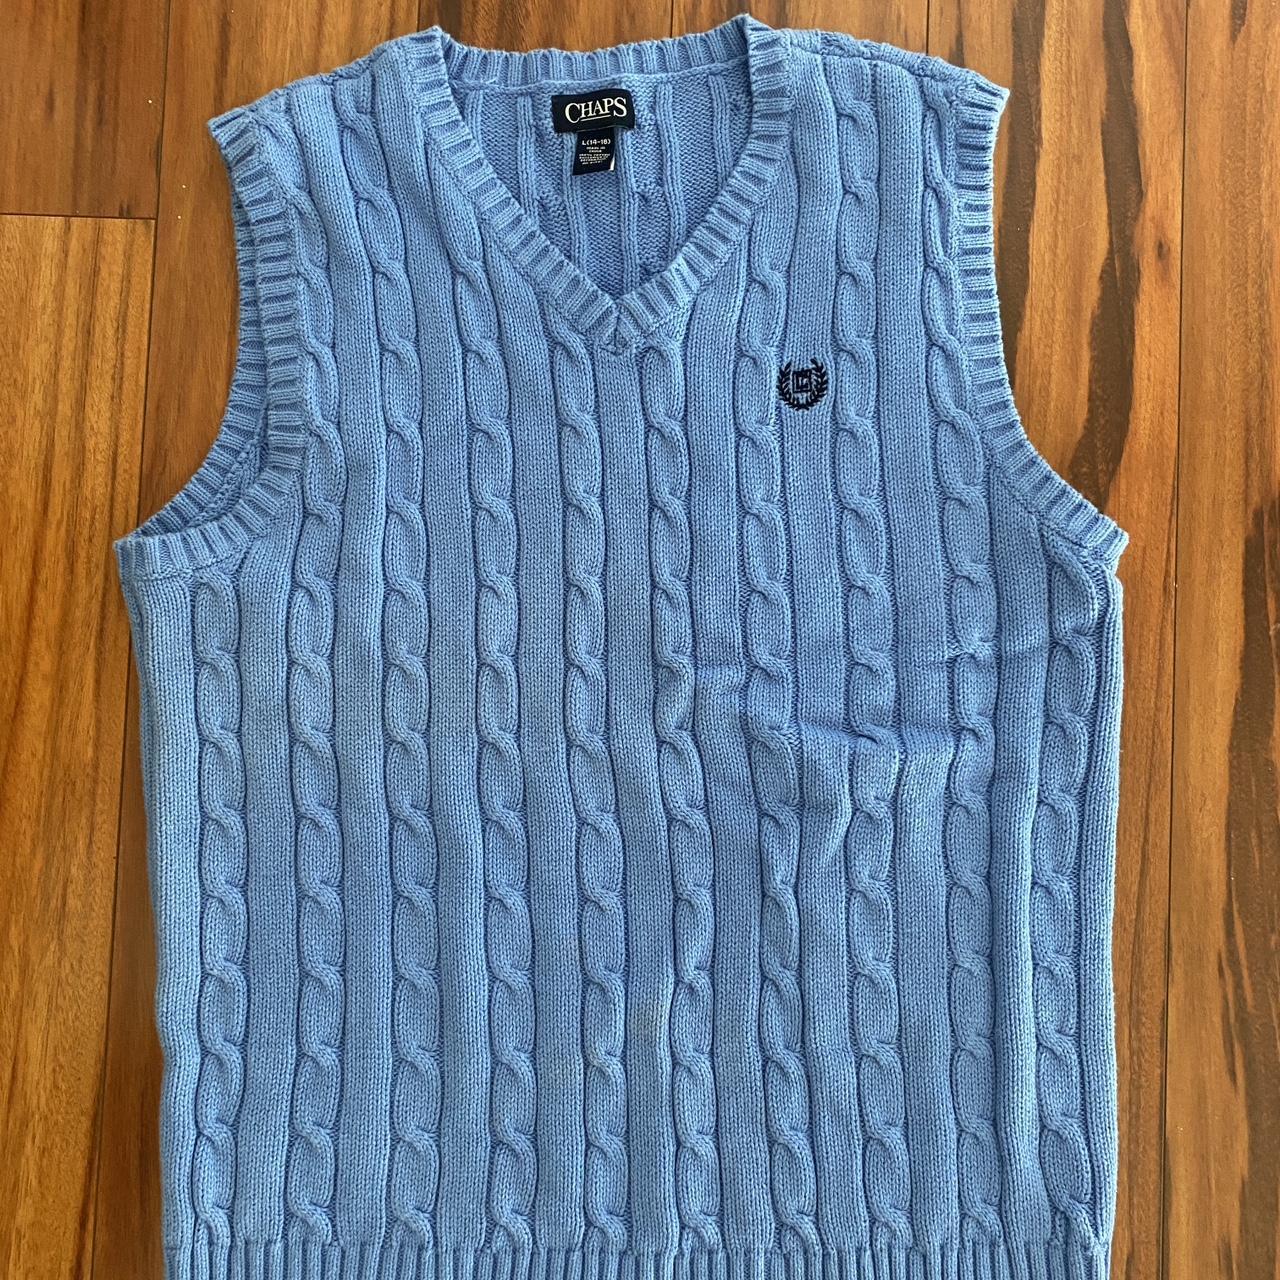 light blue sweater vest size medium no flaws - Depop